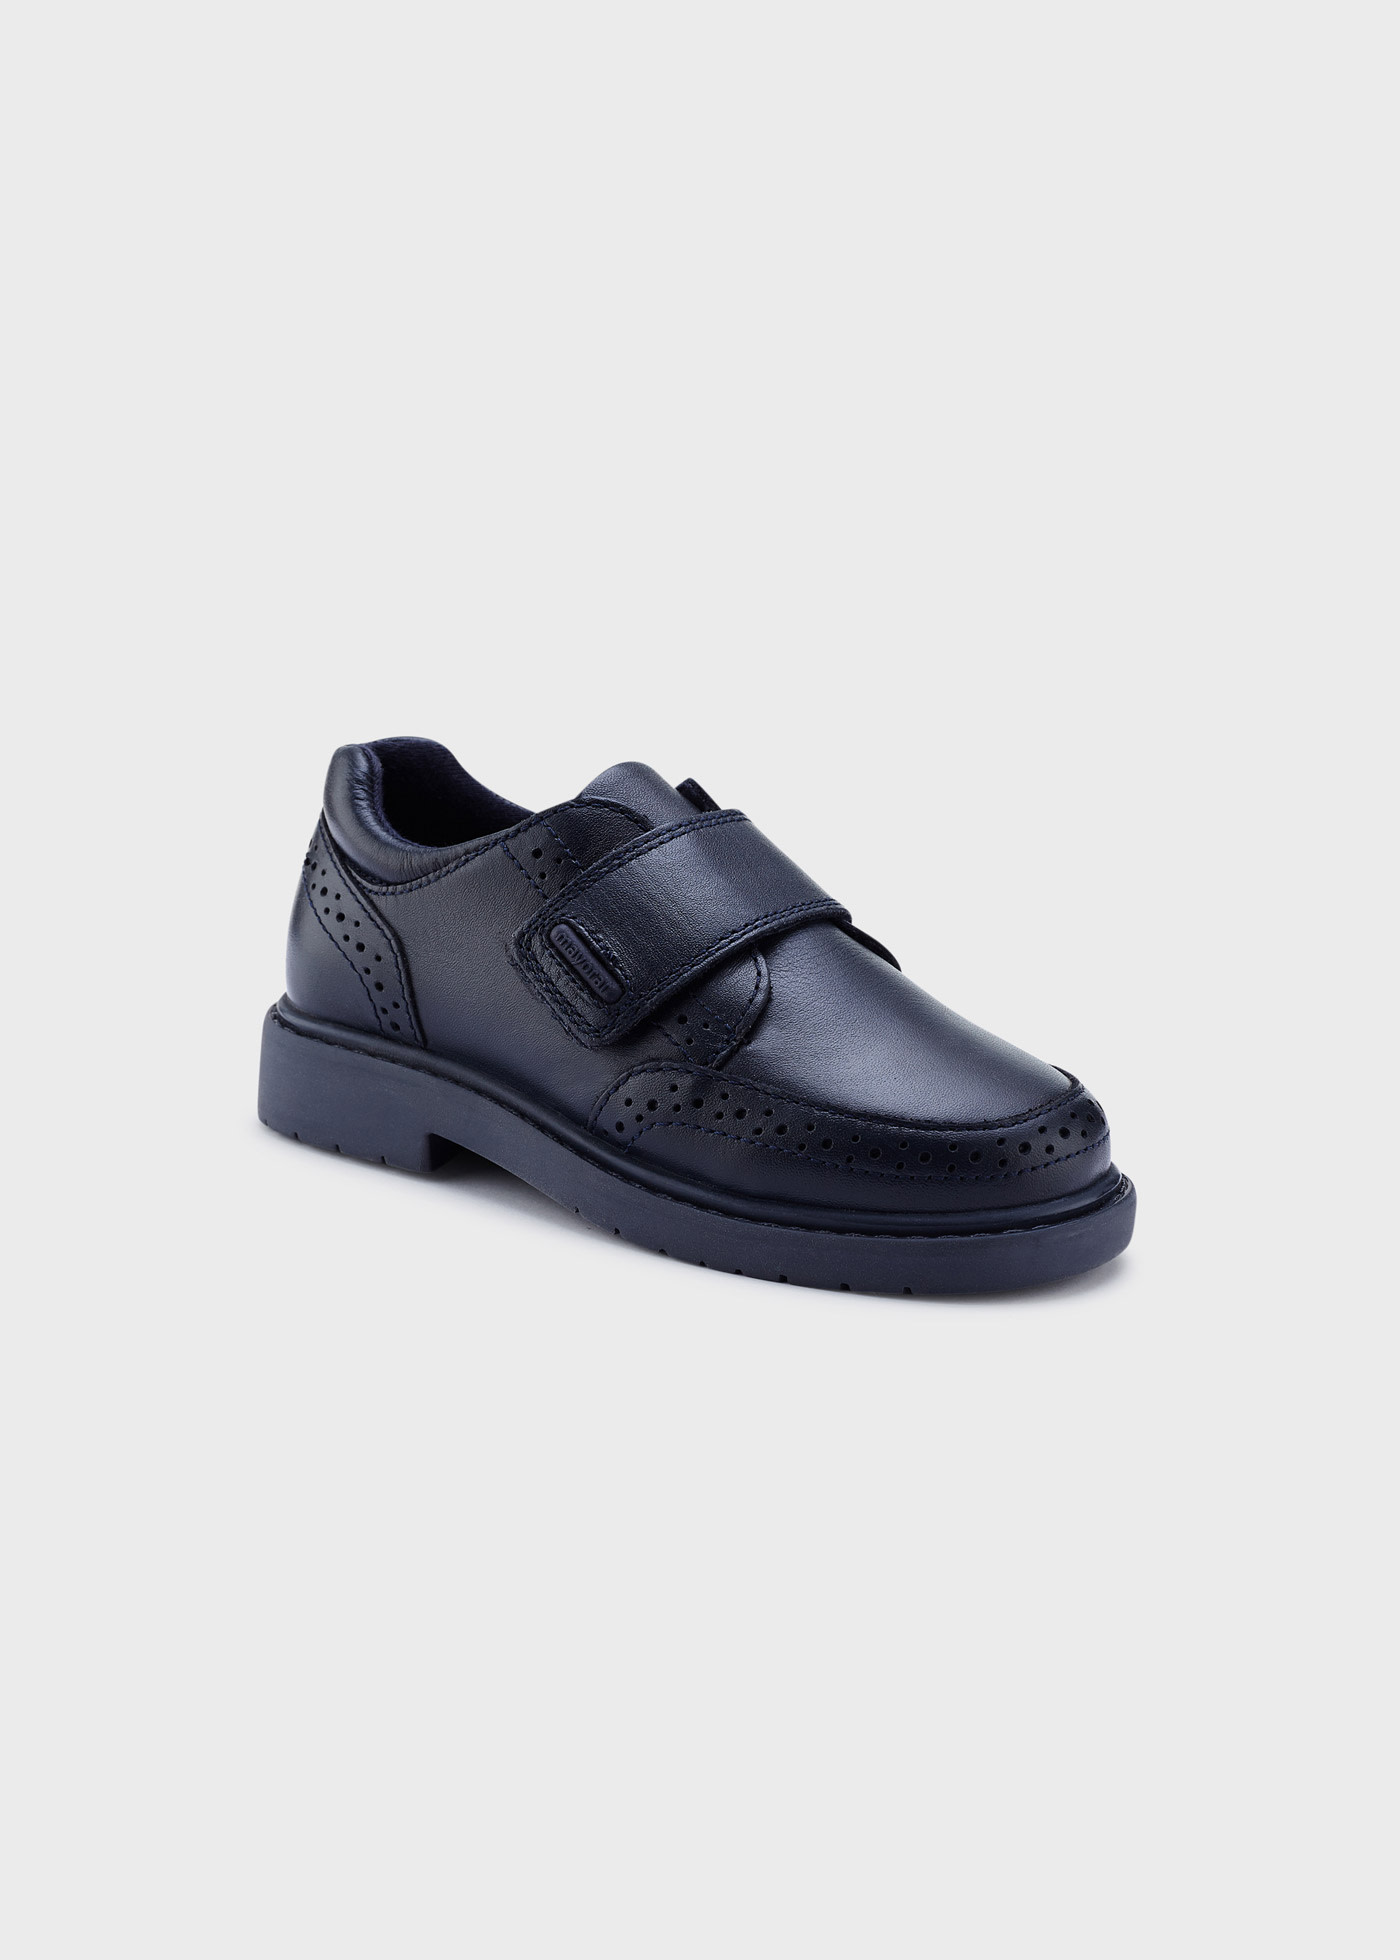 Boy leather school shoes